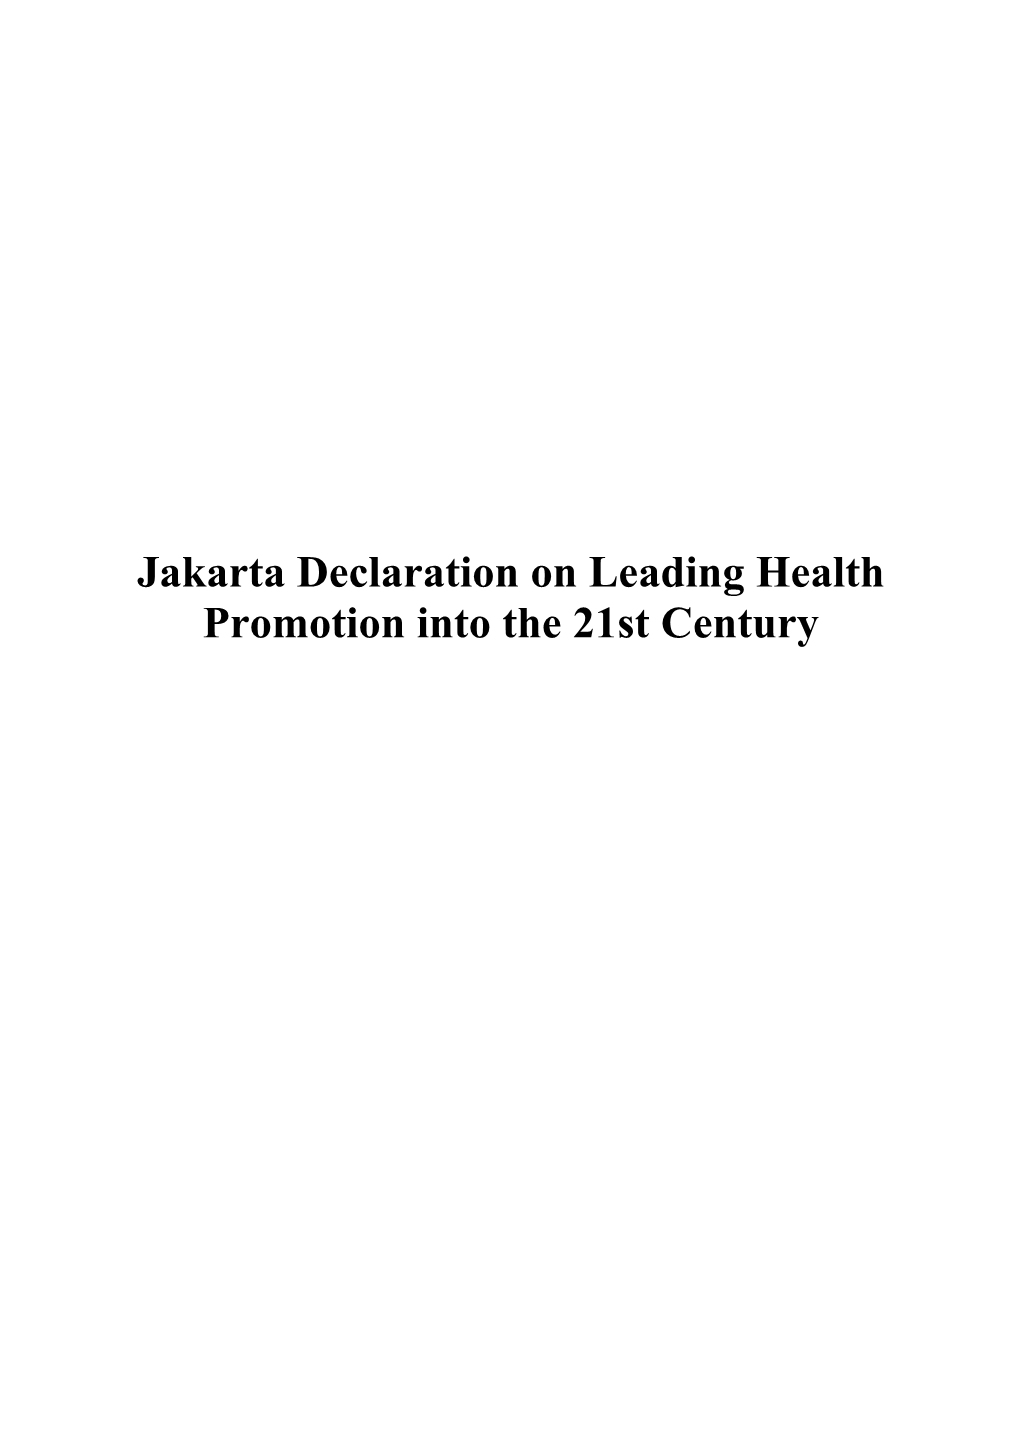 Jakarta Declaration on Leading Health Promotion Into the 21St Century Preamble